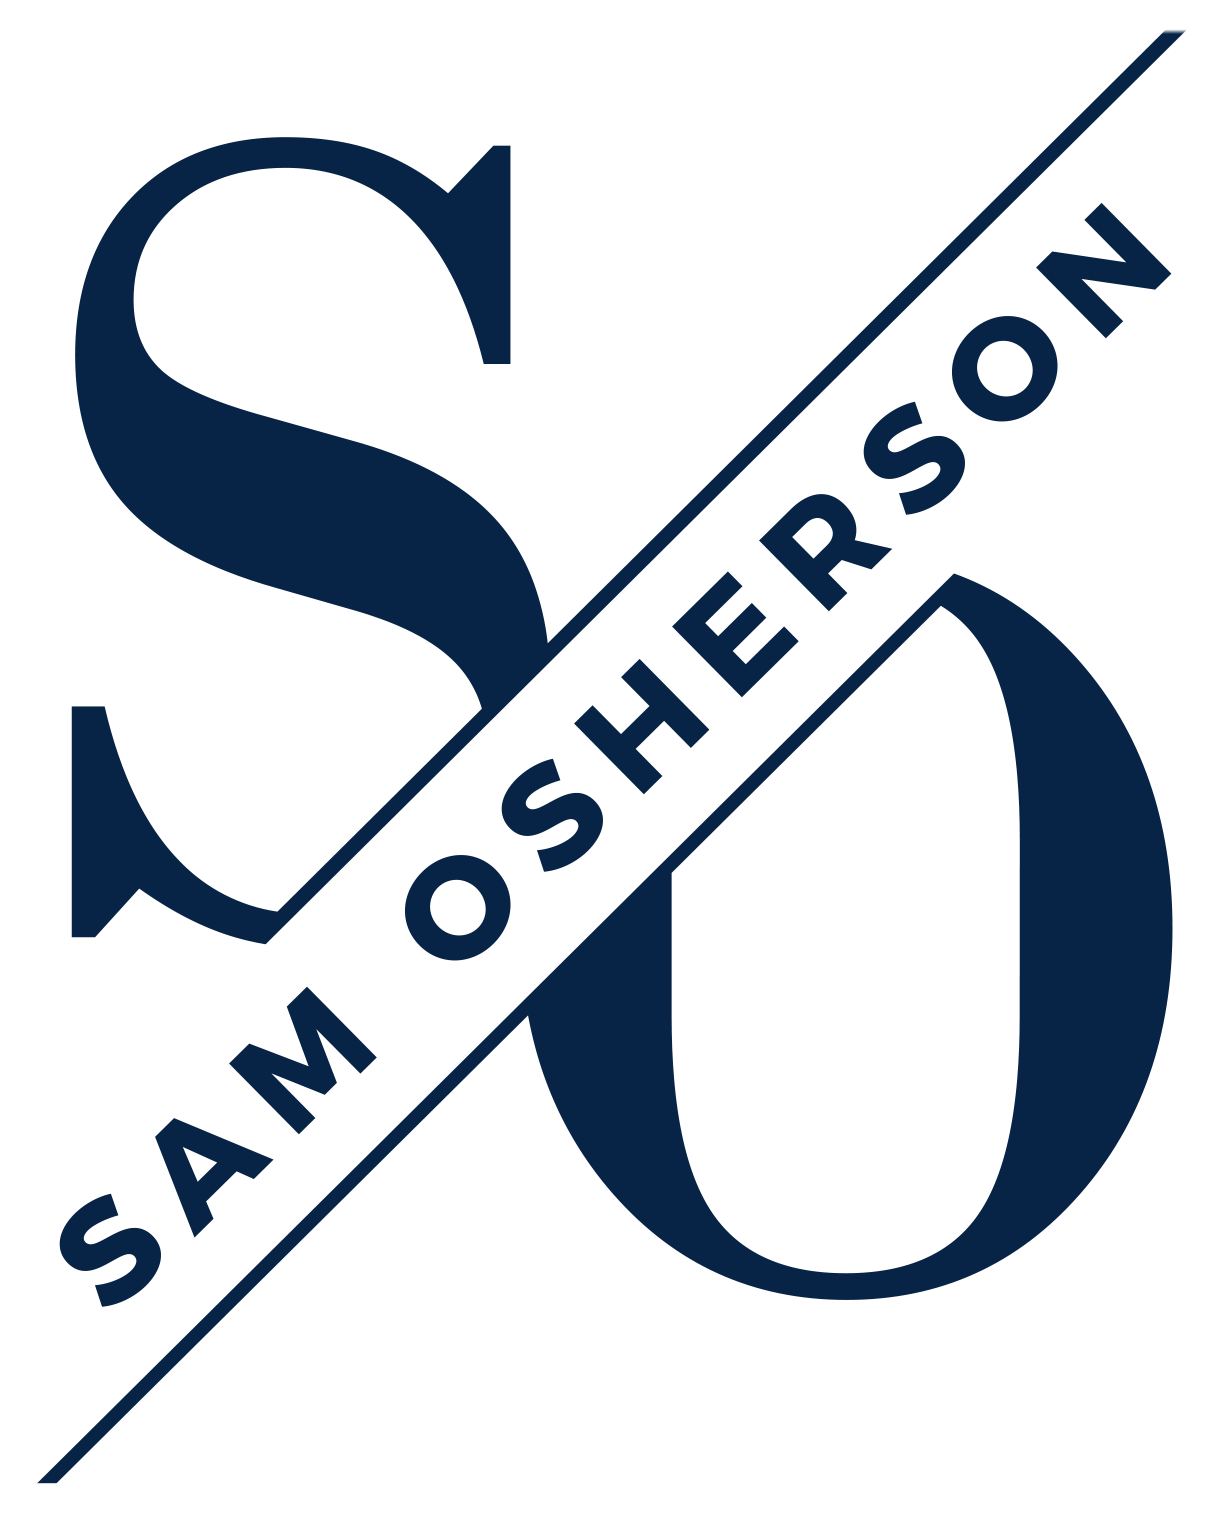 Sam Osherson